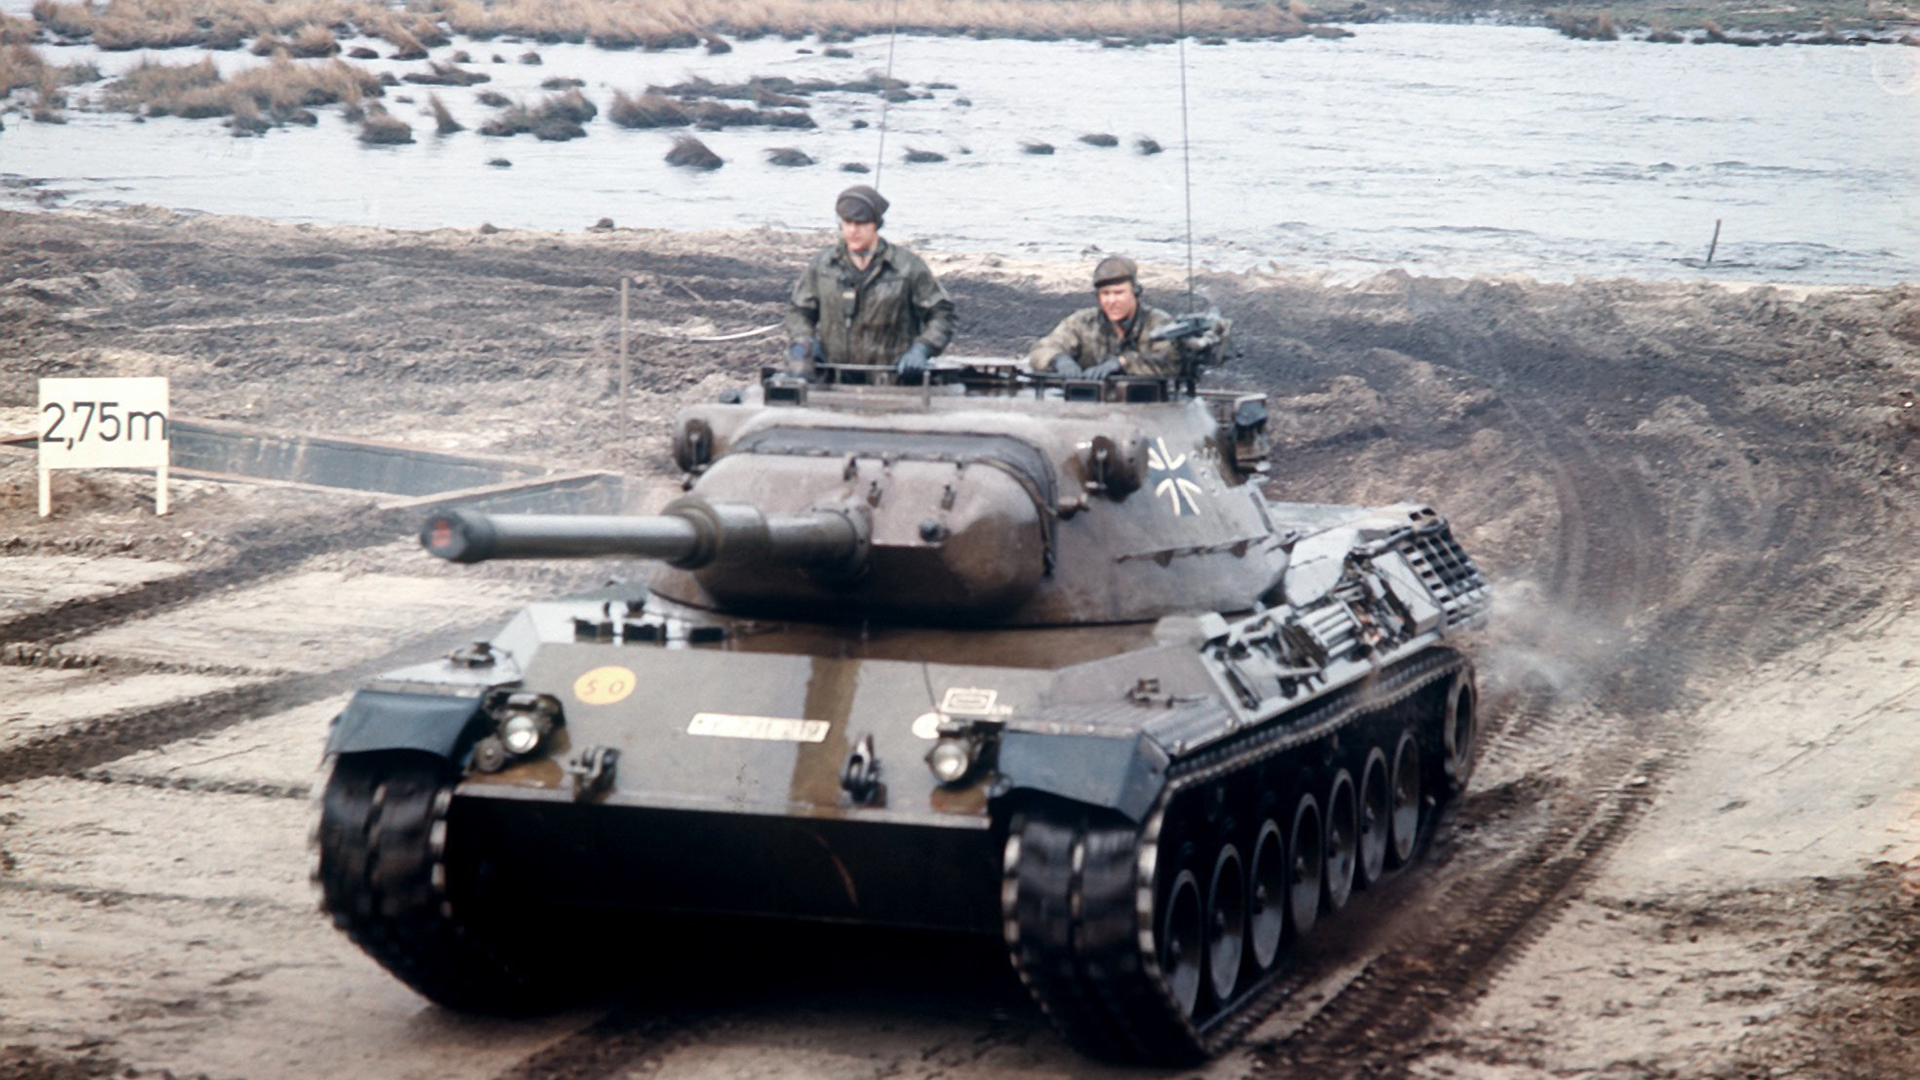 Panzer Leopard 1 | picture-alliance / dpa